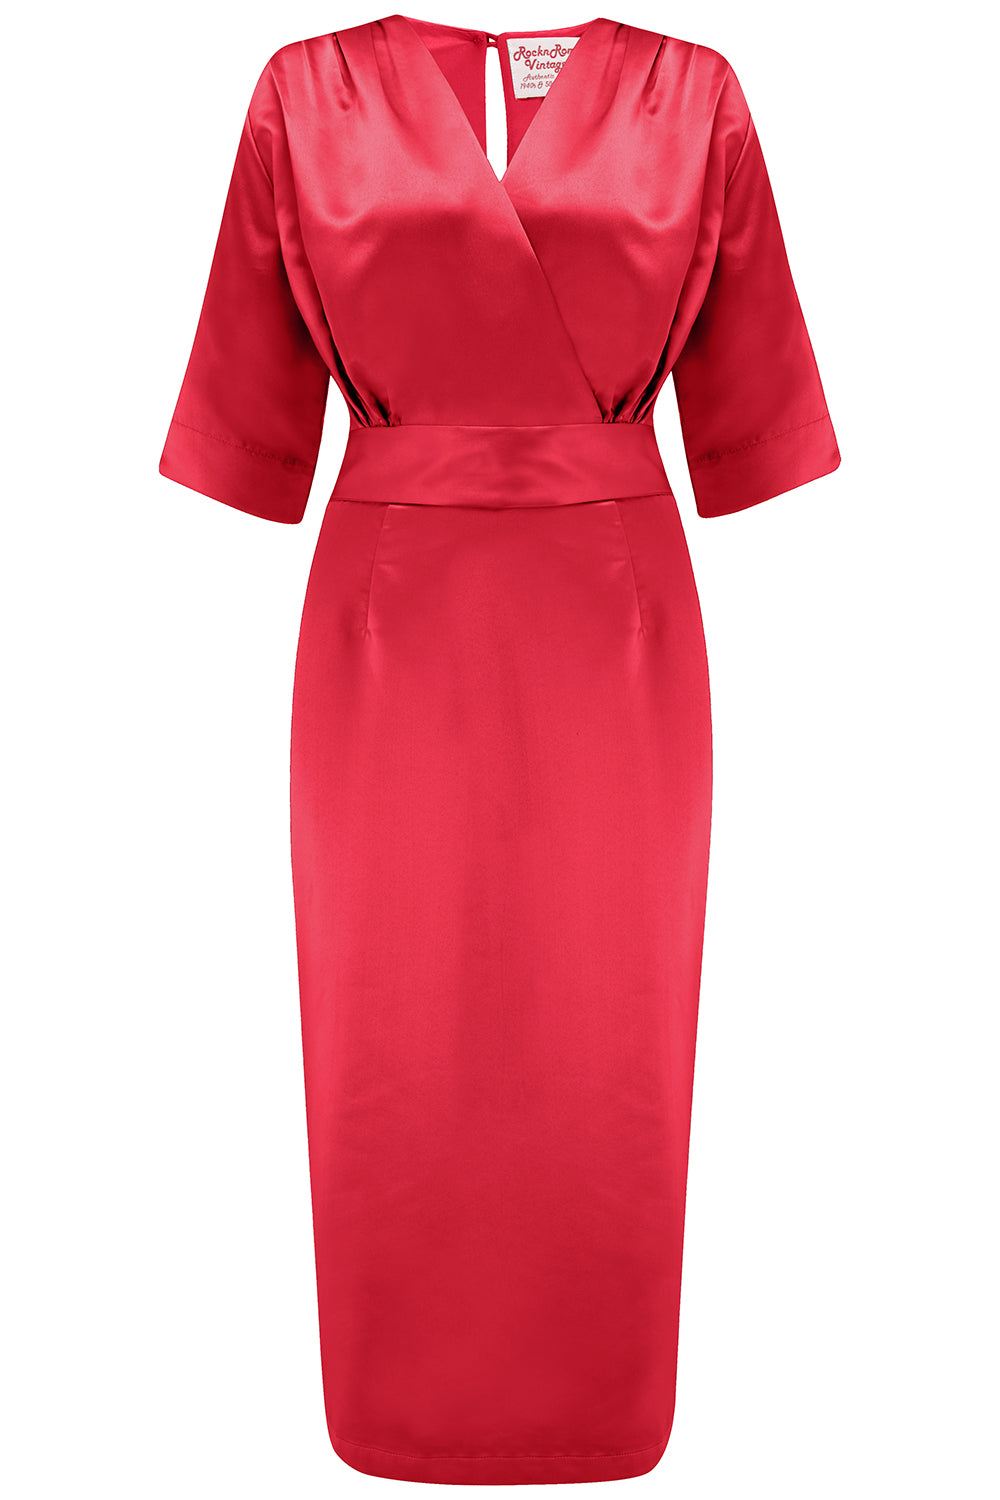 Nouvelle gamme RnR « Luxe ». La robe Wiggle « Evelyn » en SATIN Rouge Écarlate Super Luxueux